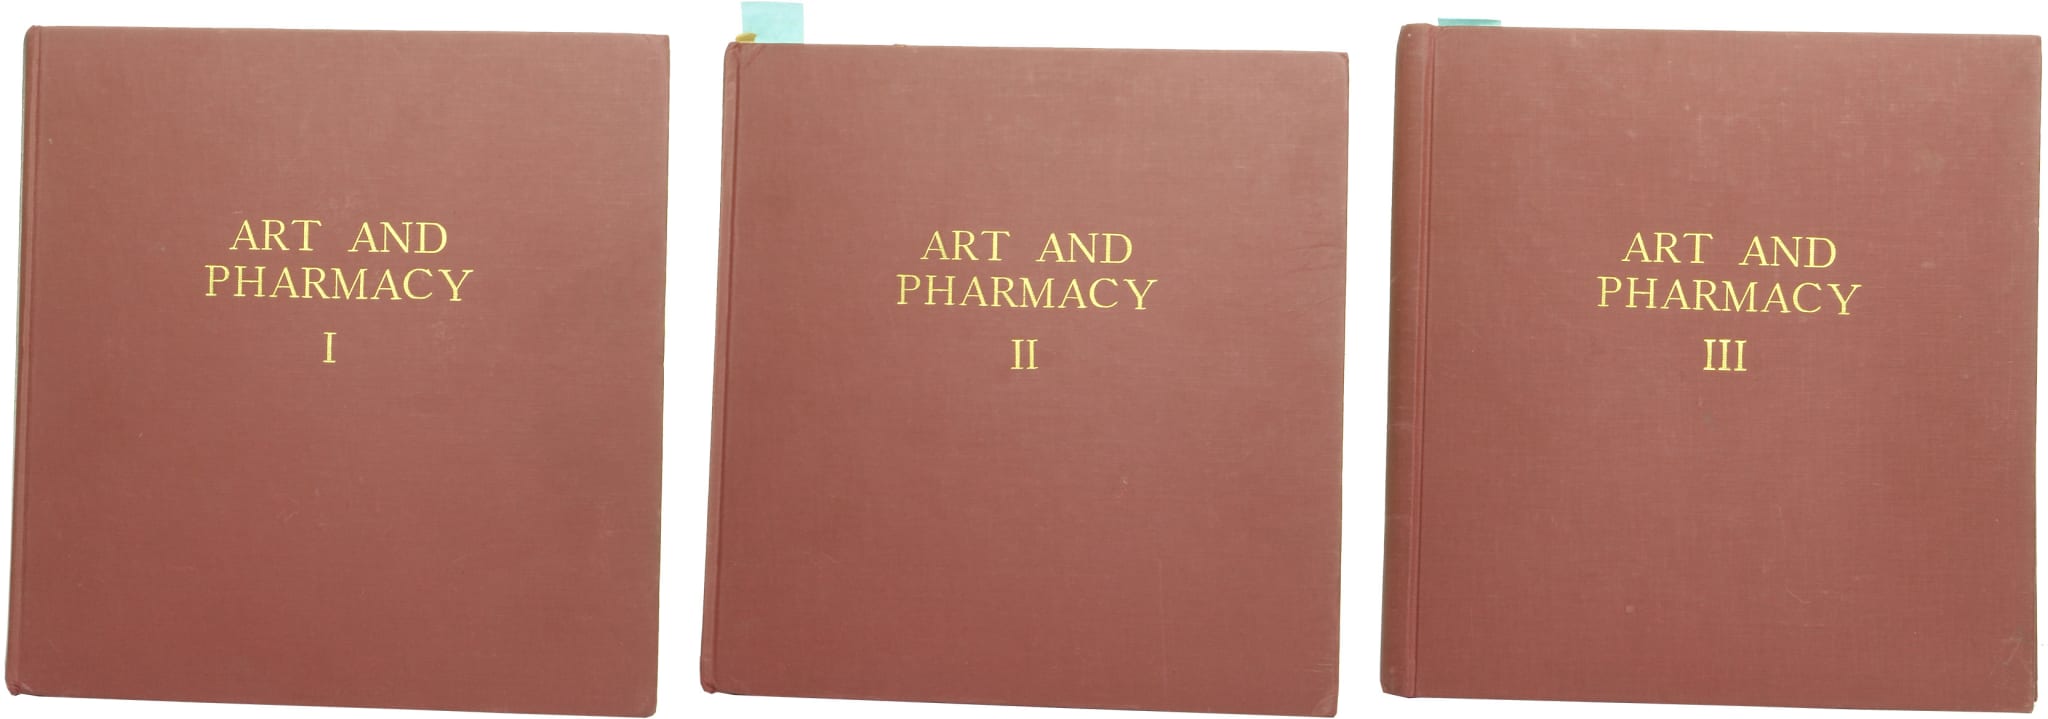 Art and Pharmacy Books